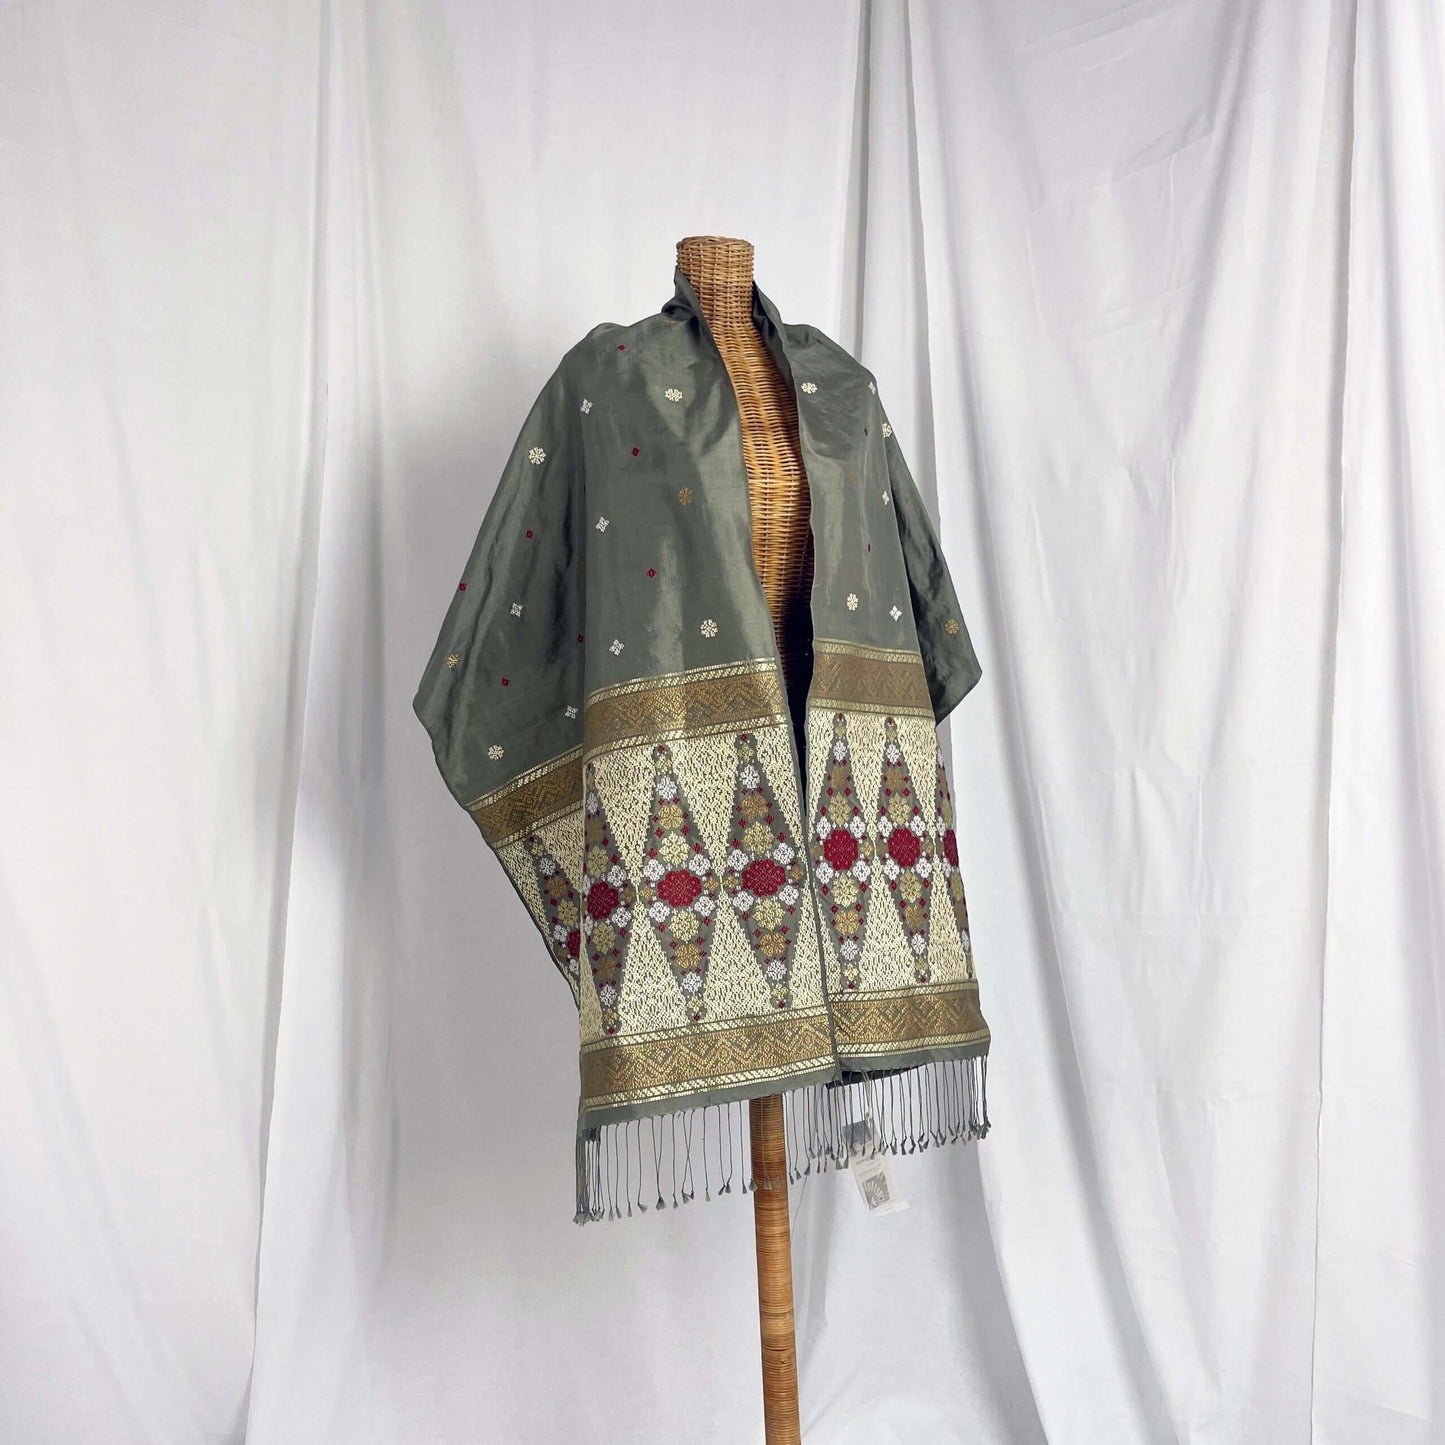 Gemilang Charcoal handwoven silk songket shawl textile